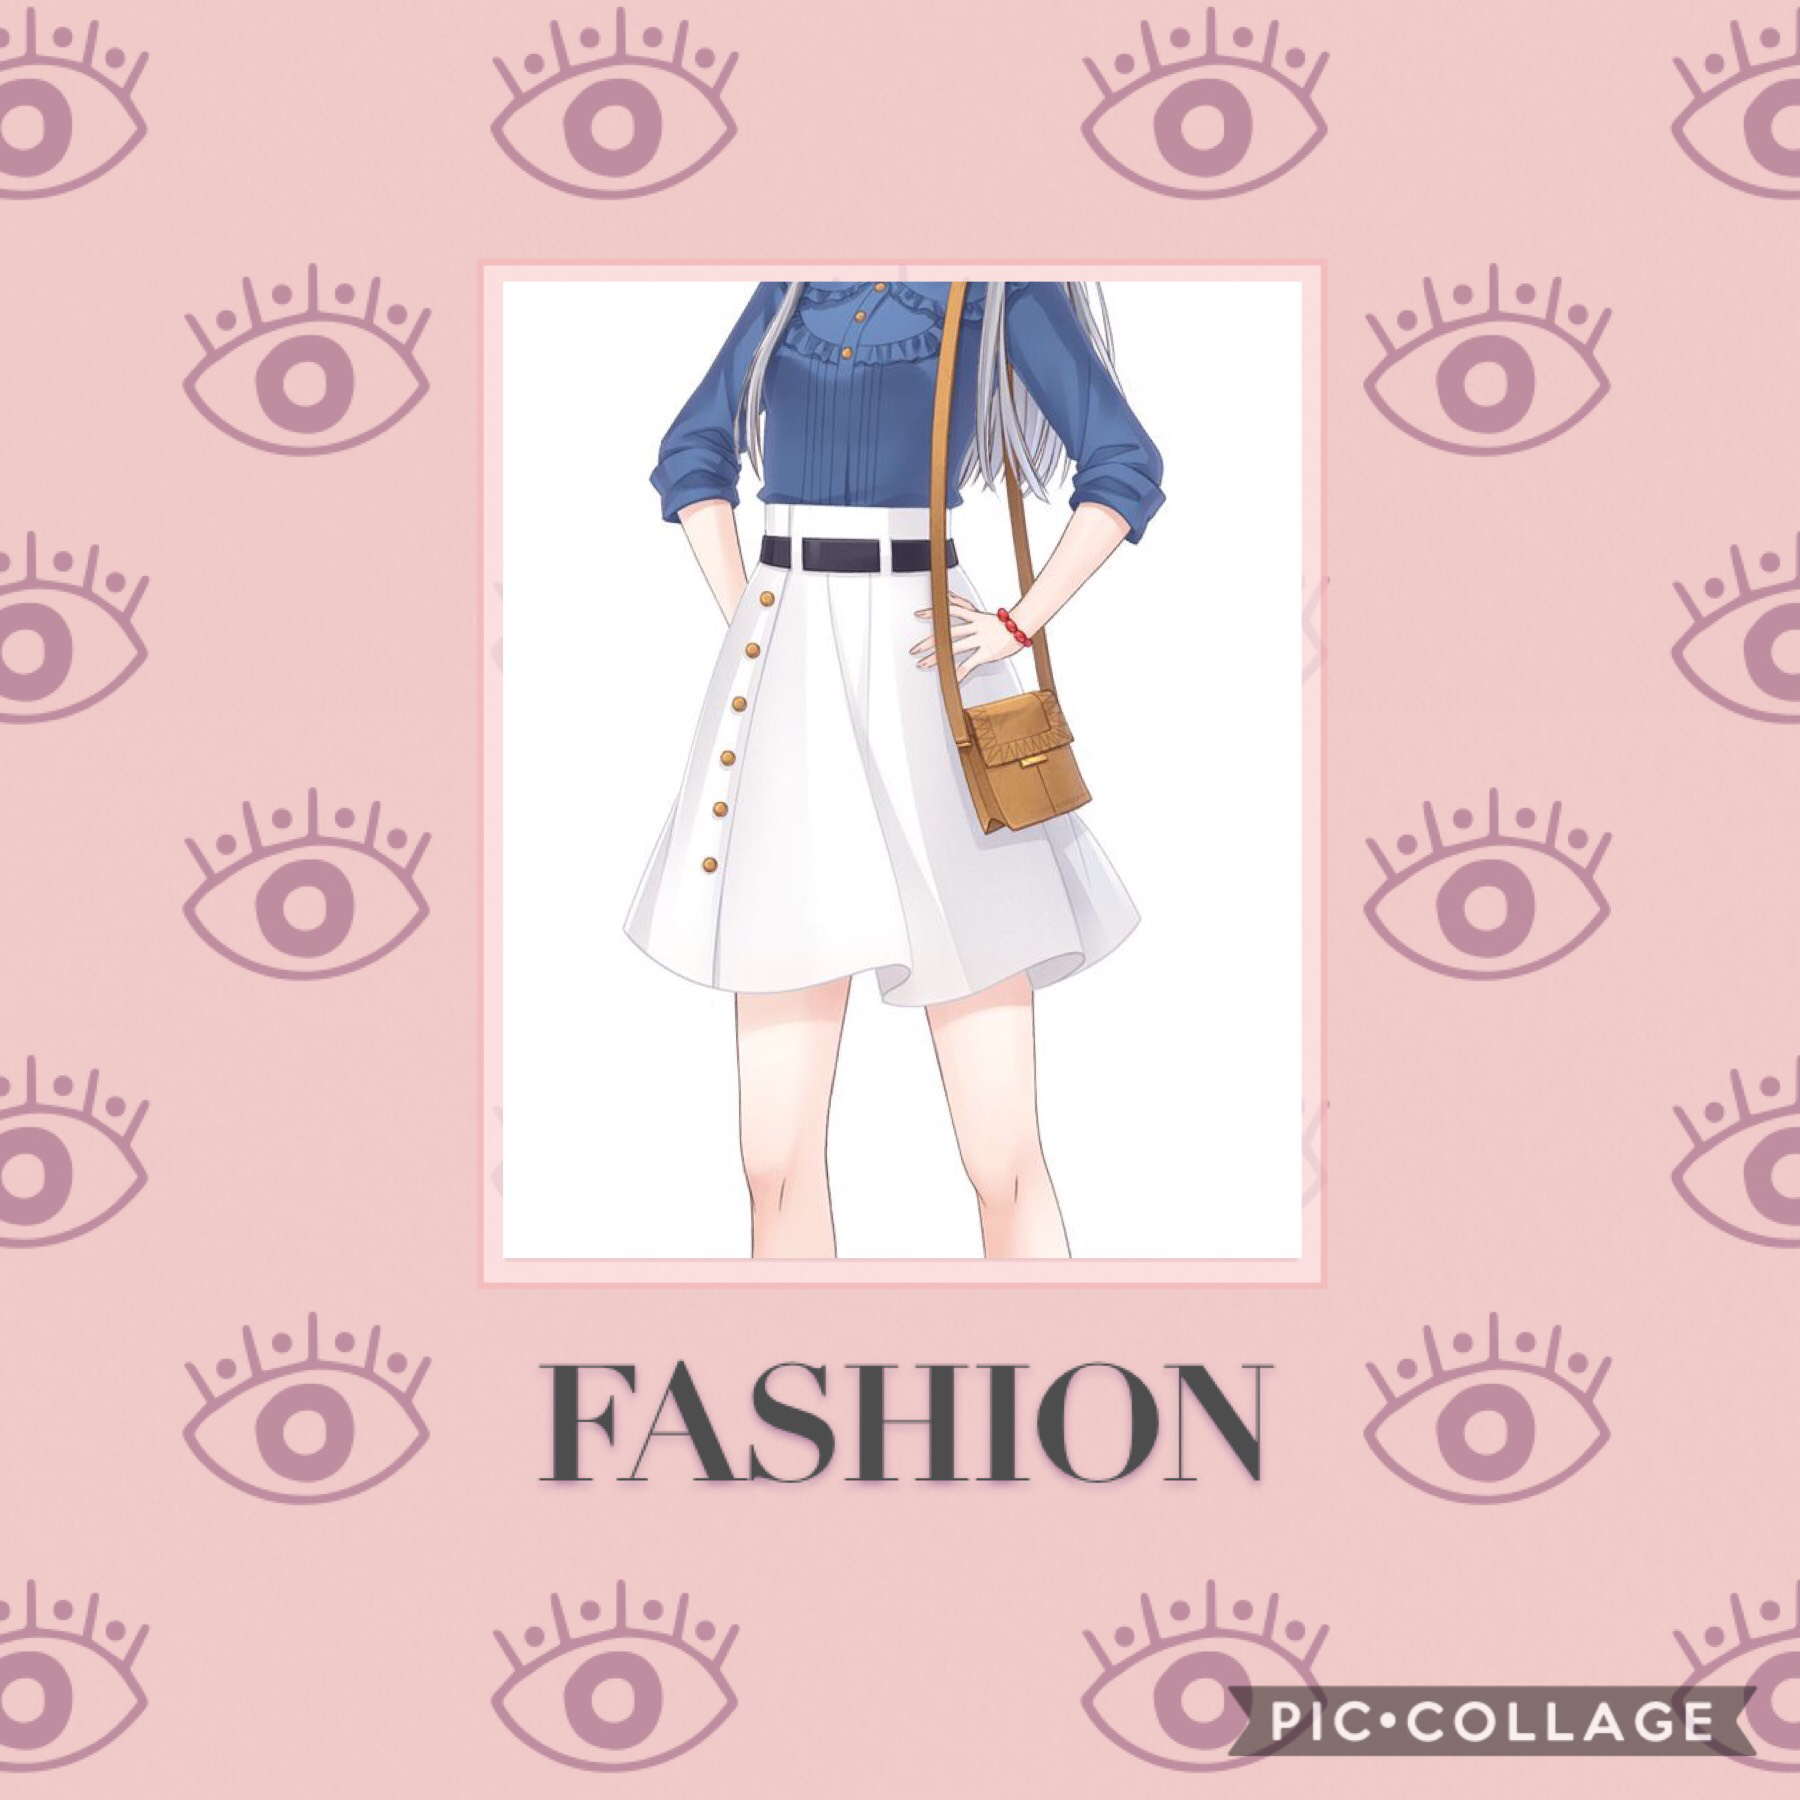 I made this dress on a anime app